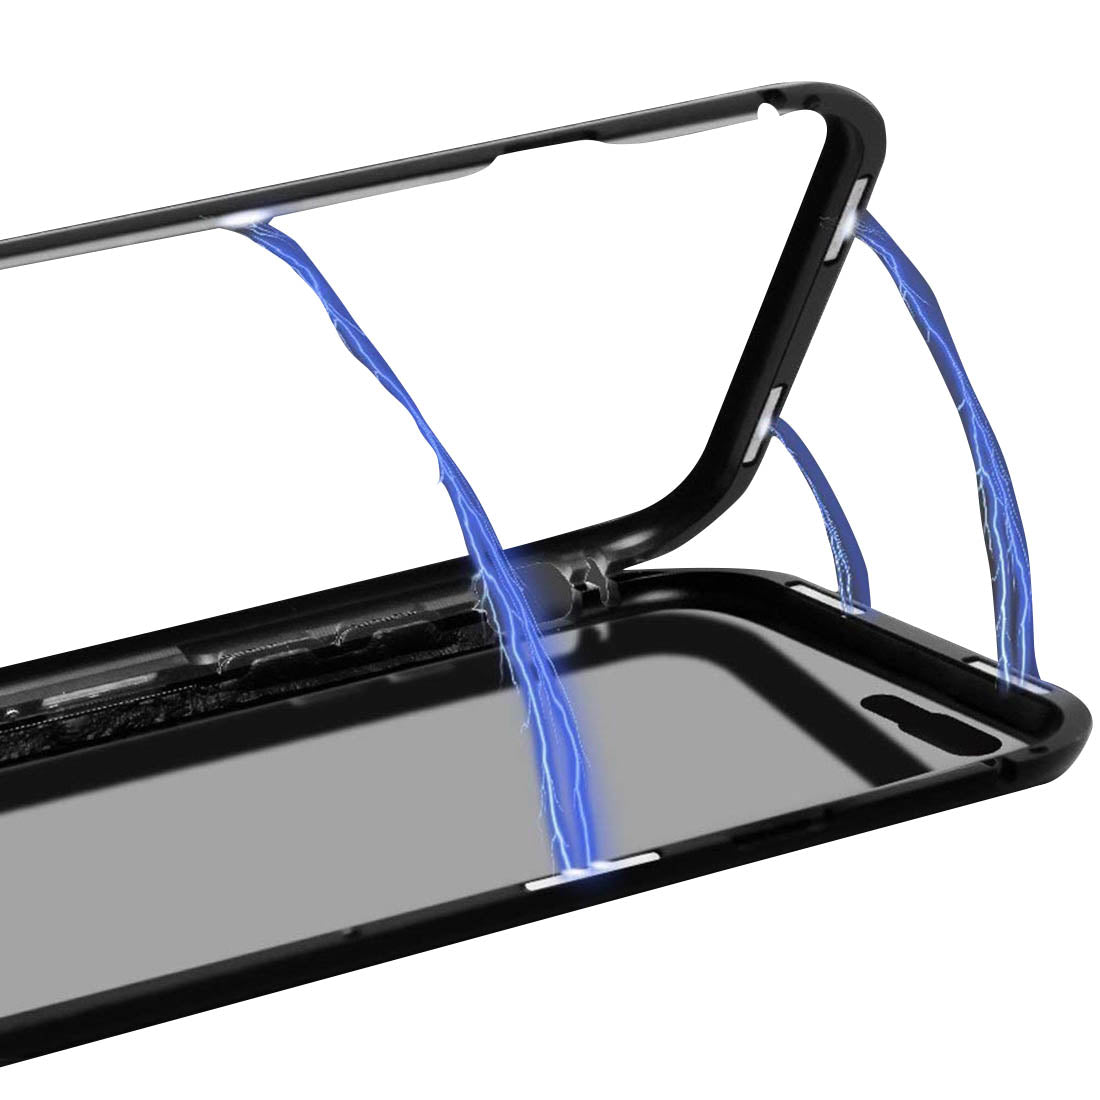 Magnetic Metal Frame Bumper Glass Back Case for Vivo Z1 Pro